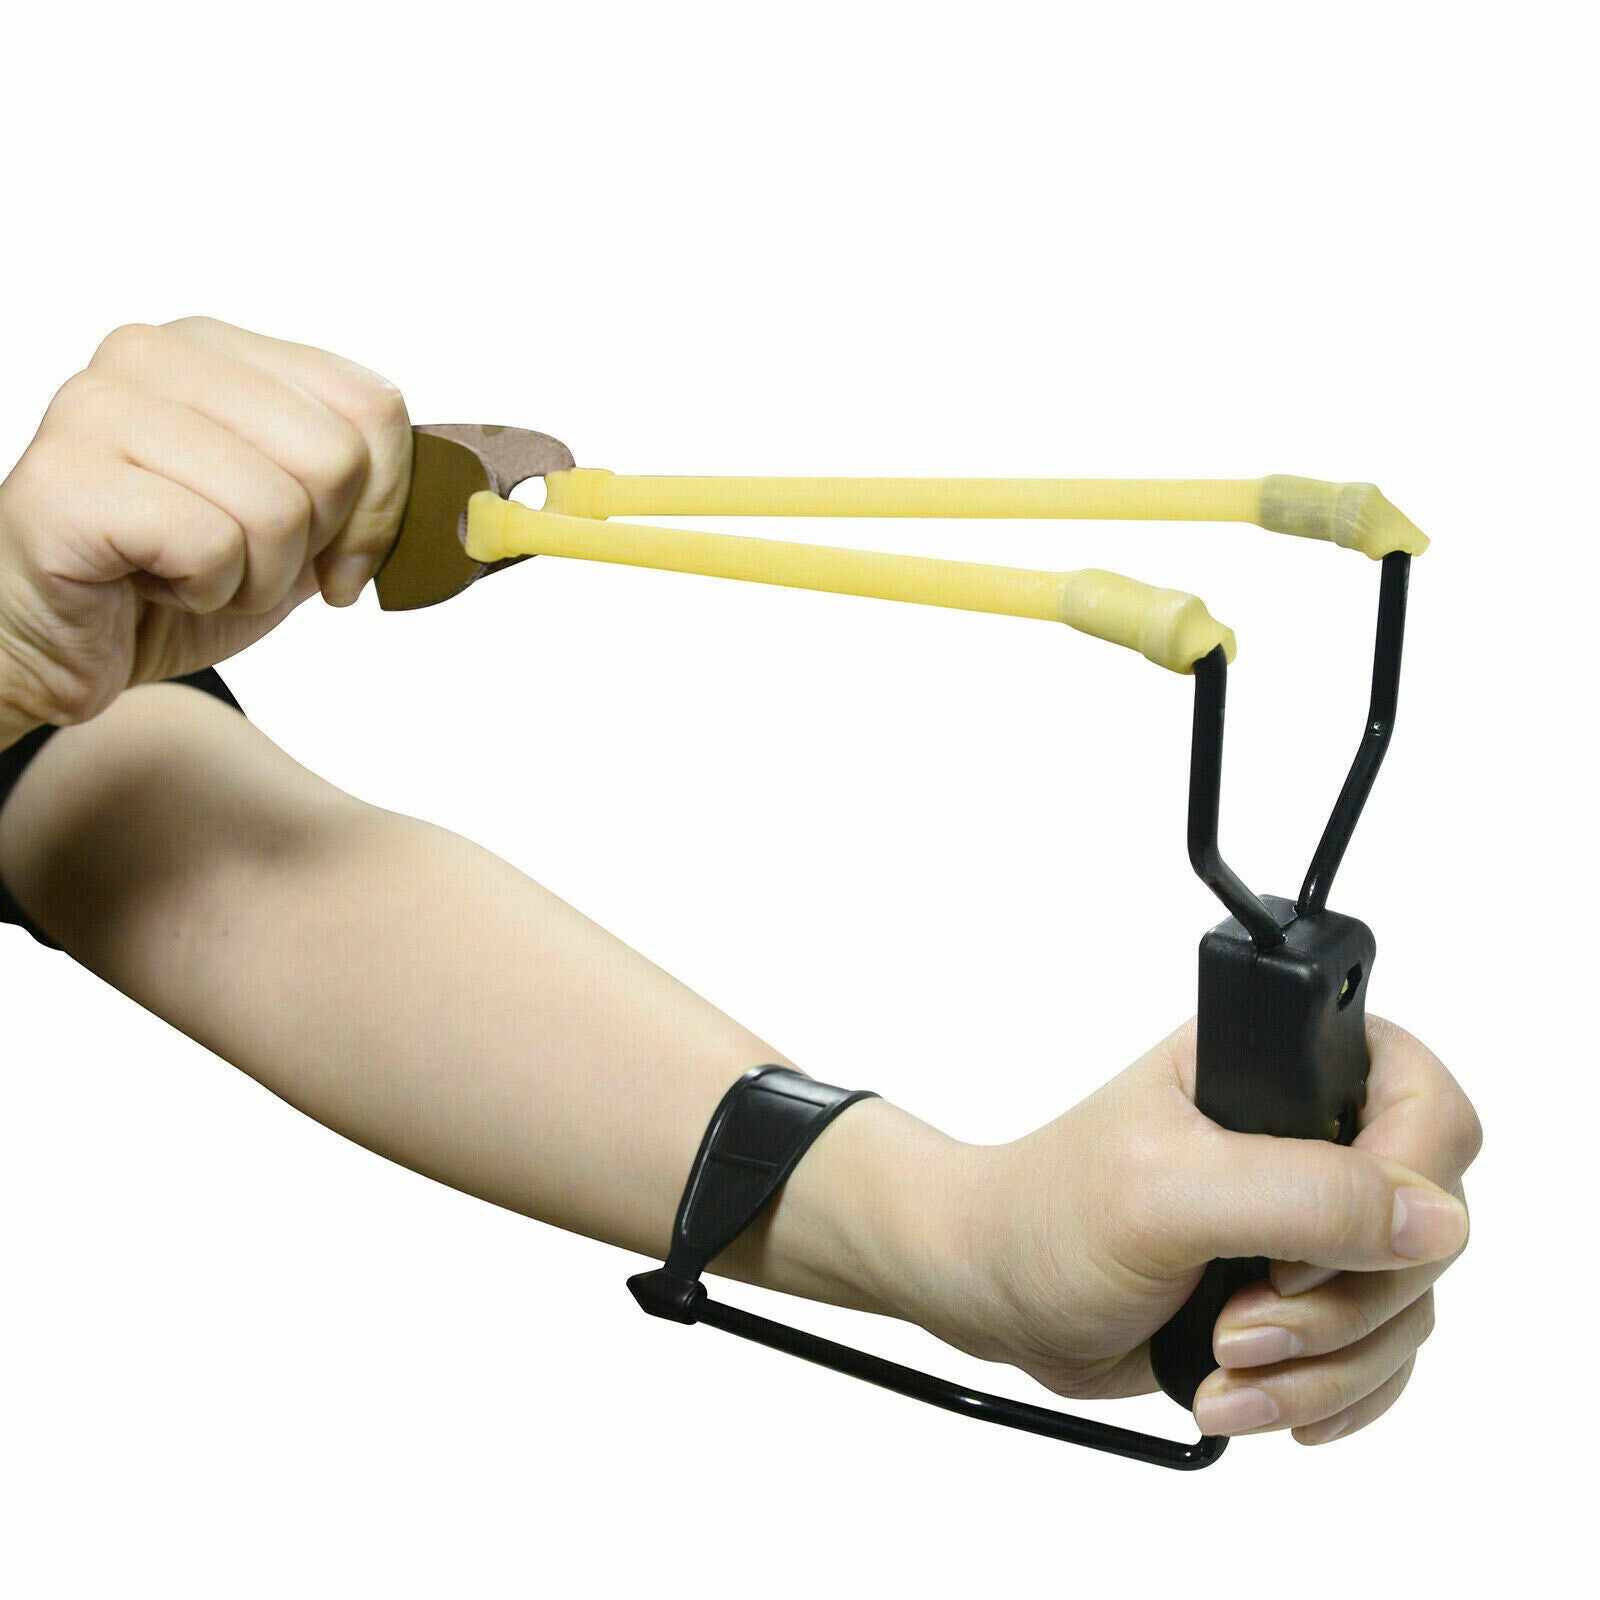 Compact Folding Slingshot Wrist Rocket Catapult For Hunting Outdoor Sport Games